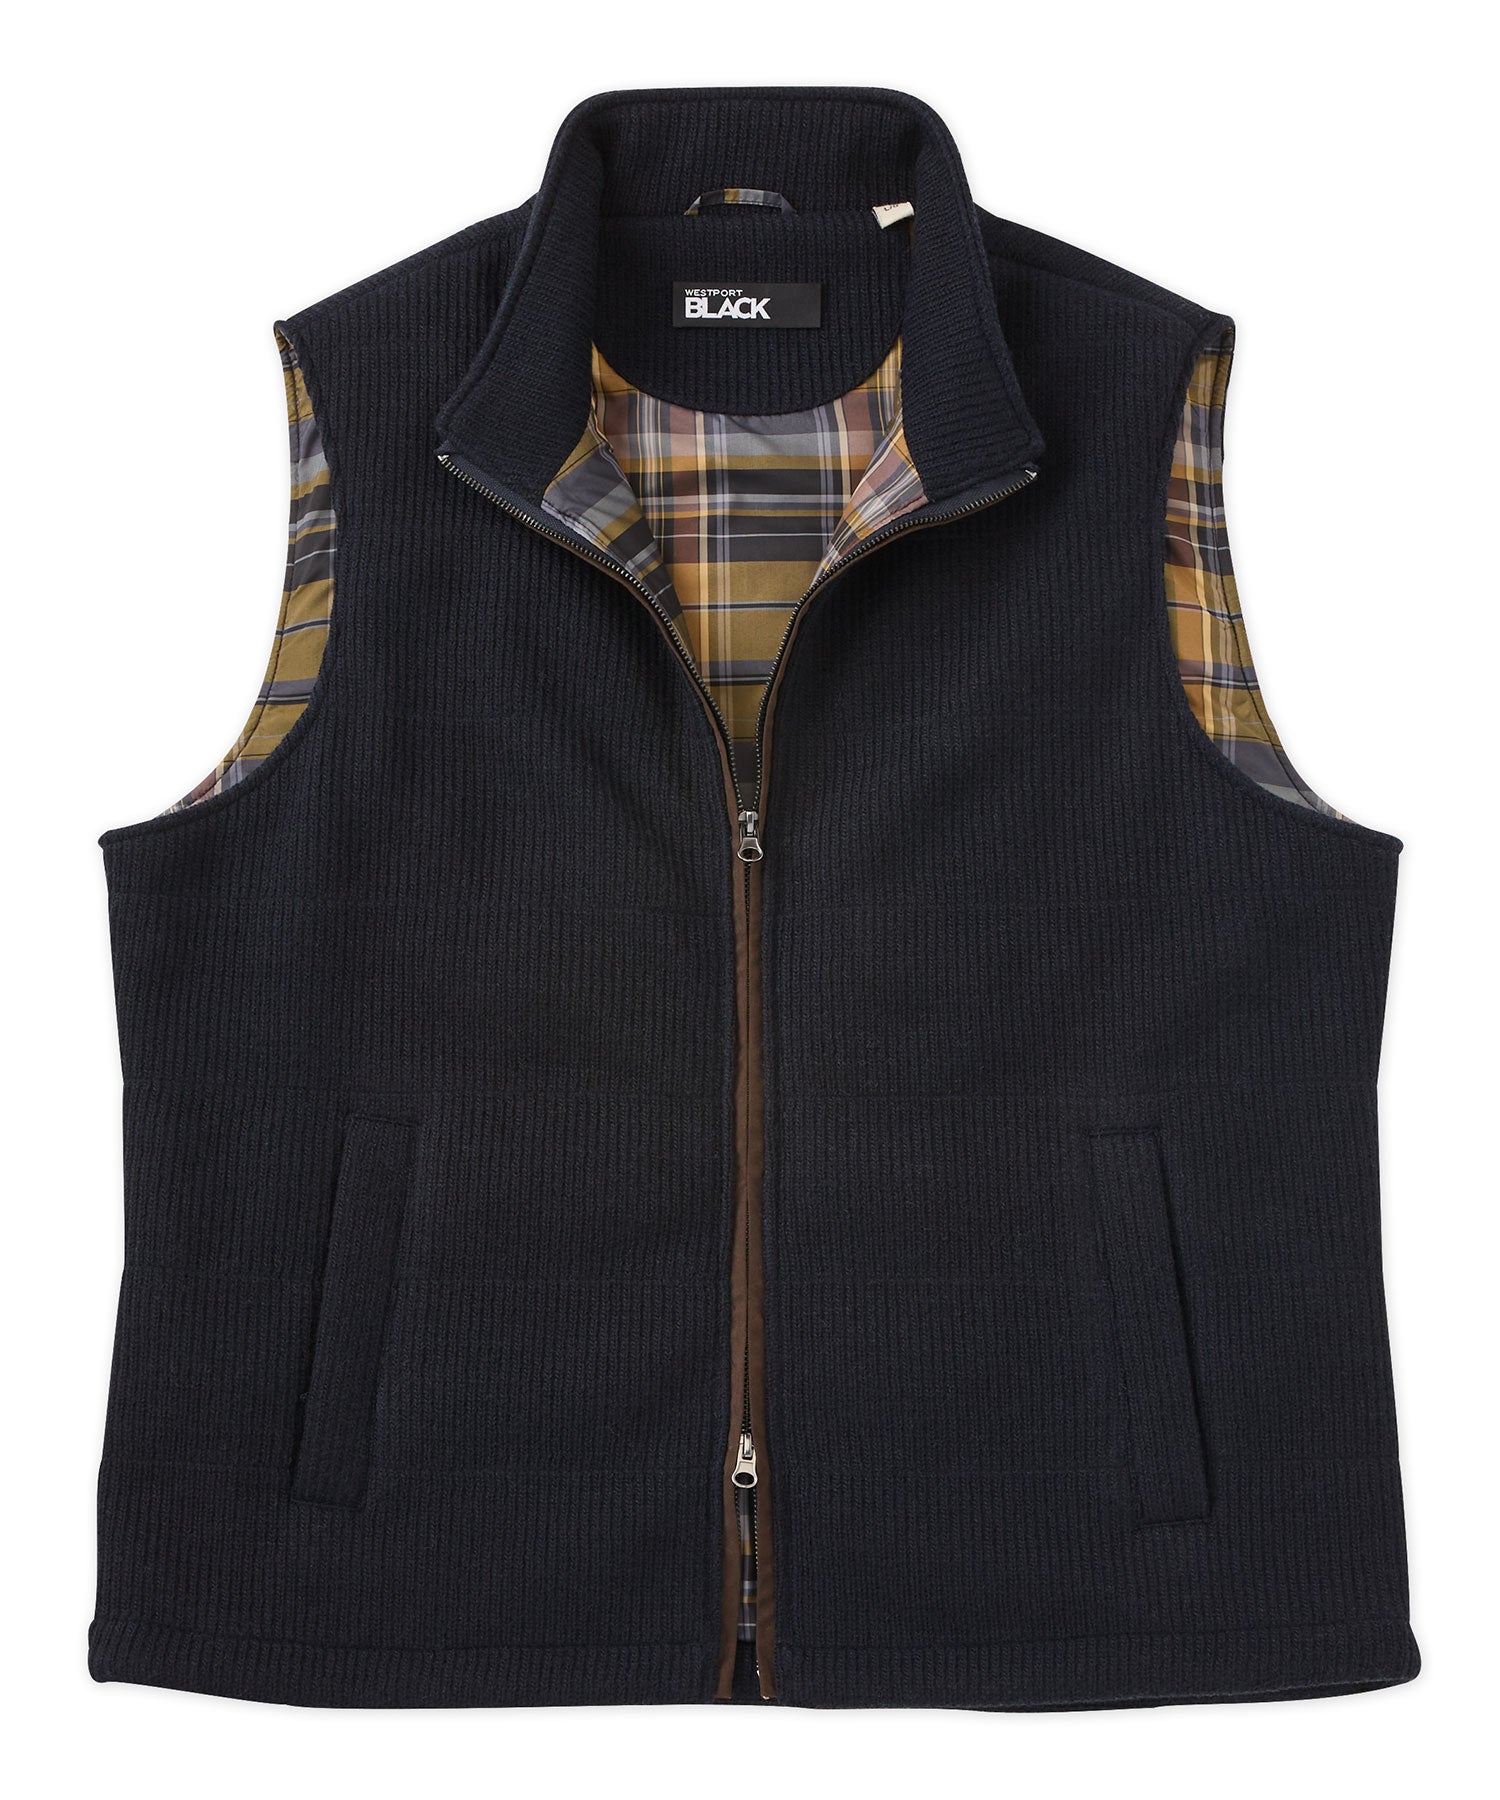 Ralph Lauren Polo Puffer down vest mens size 3XB - clothing